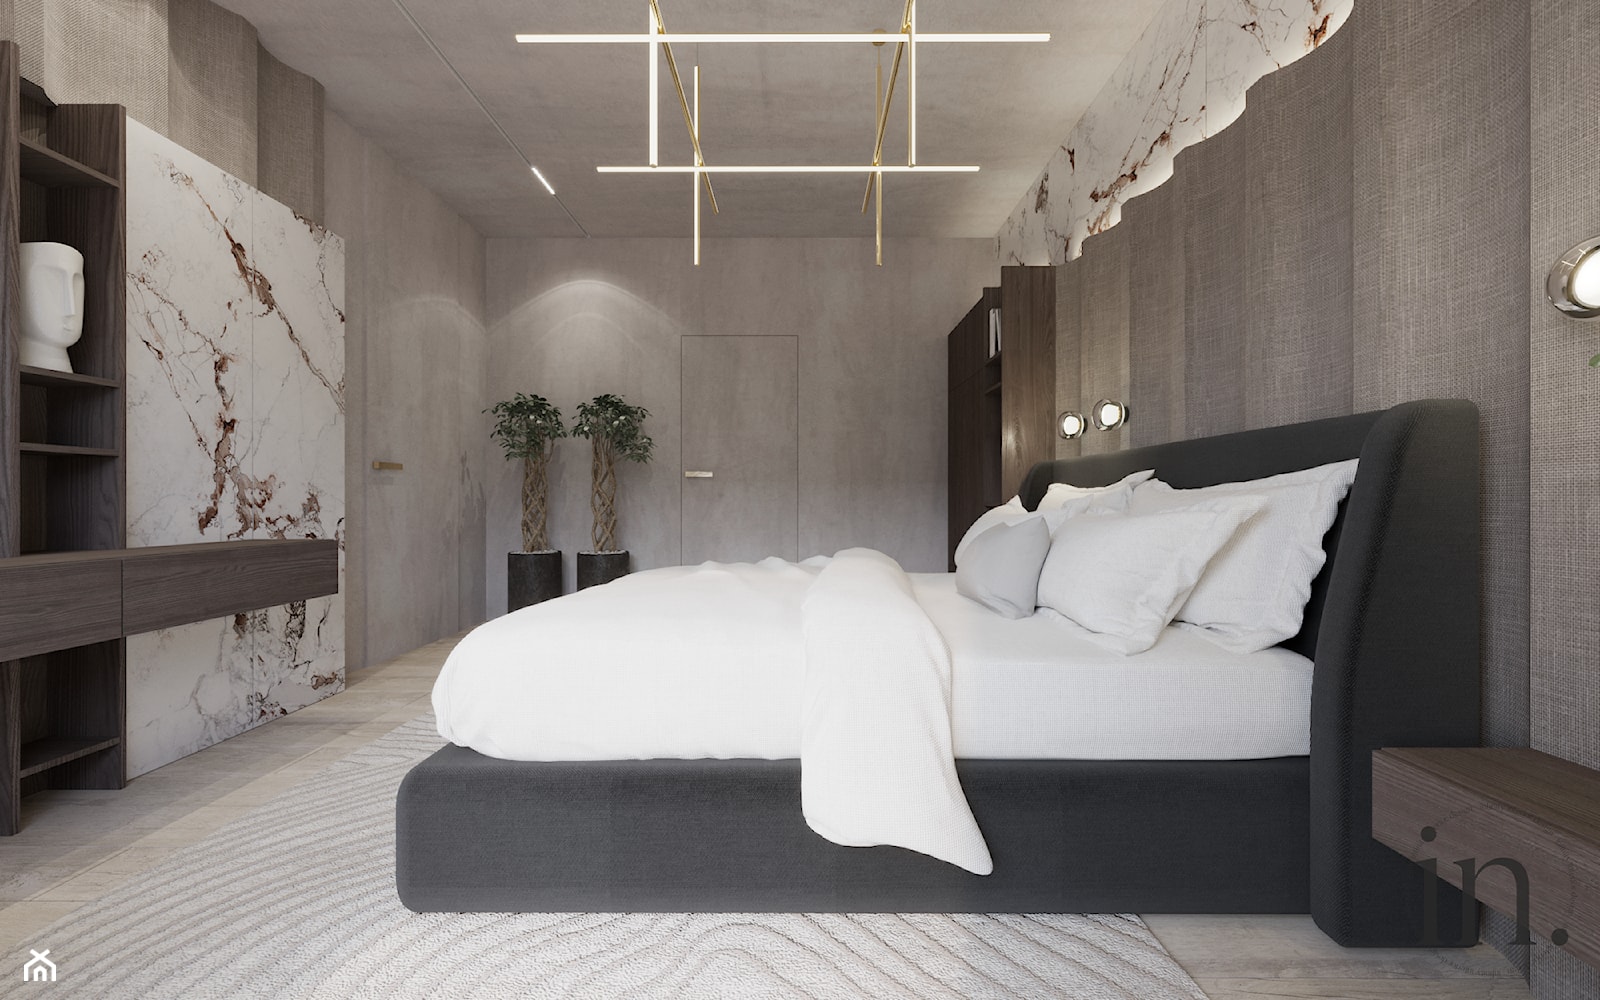 Duża sypialnia małżeńska - zdjęcie od Infinity Interior Design - Homebook